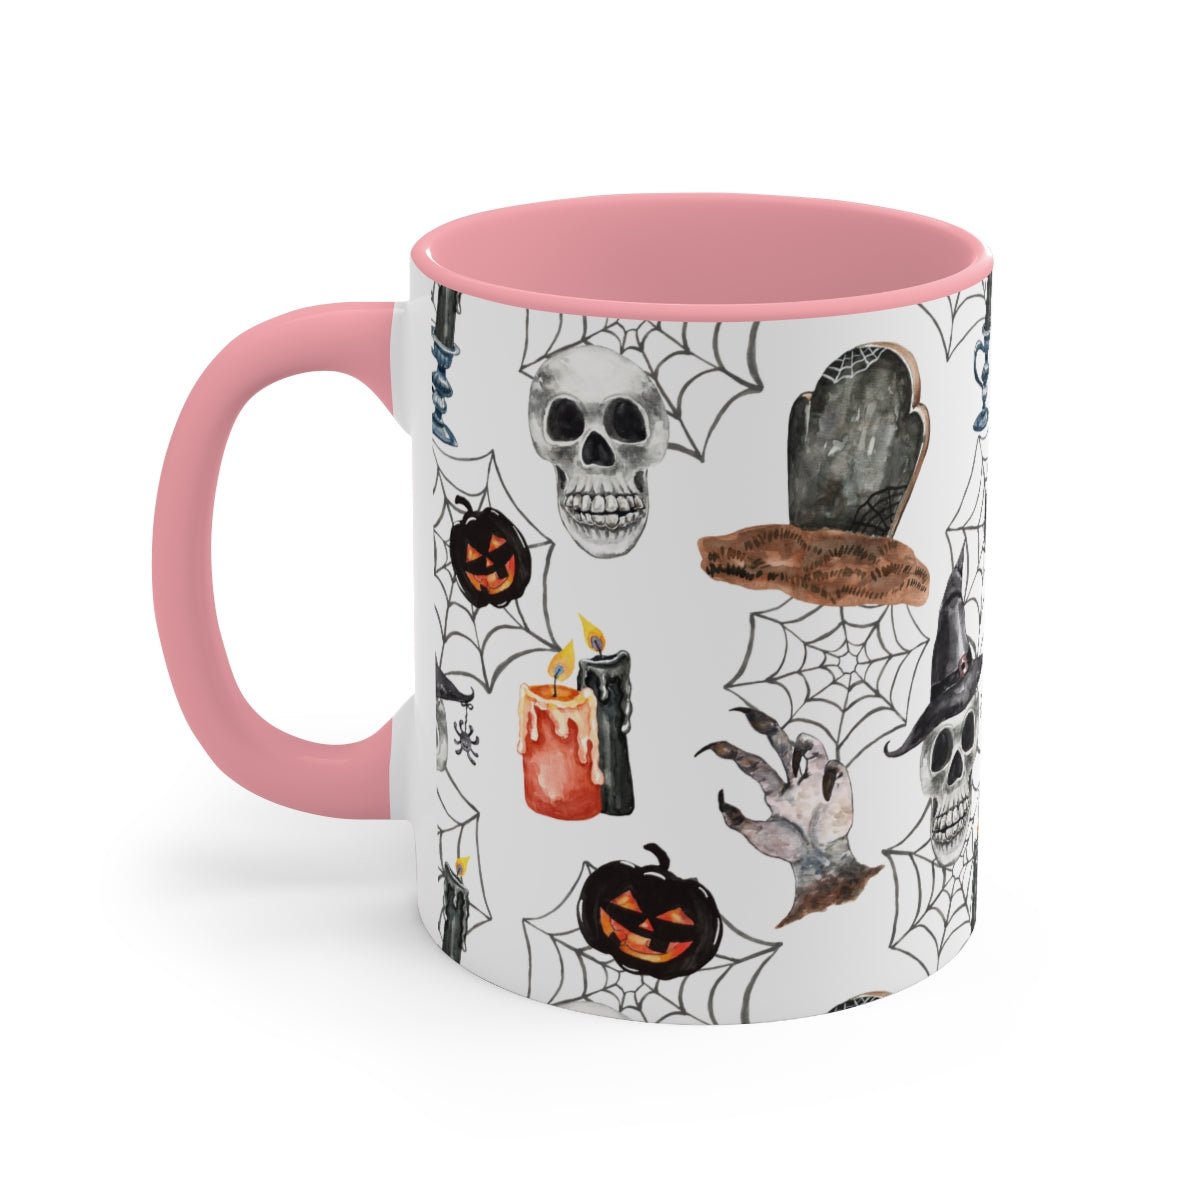 Skulls and Pumpkins Accent Mug - Puffin Lime